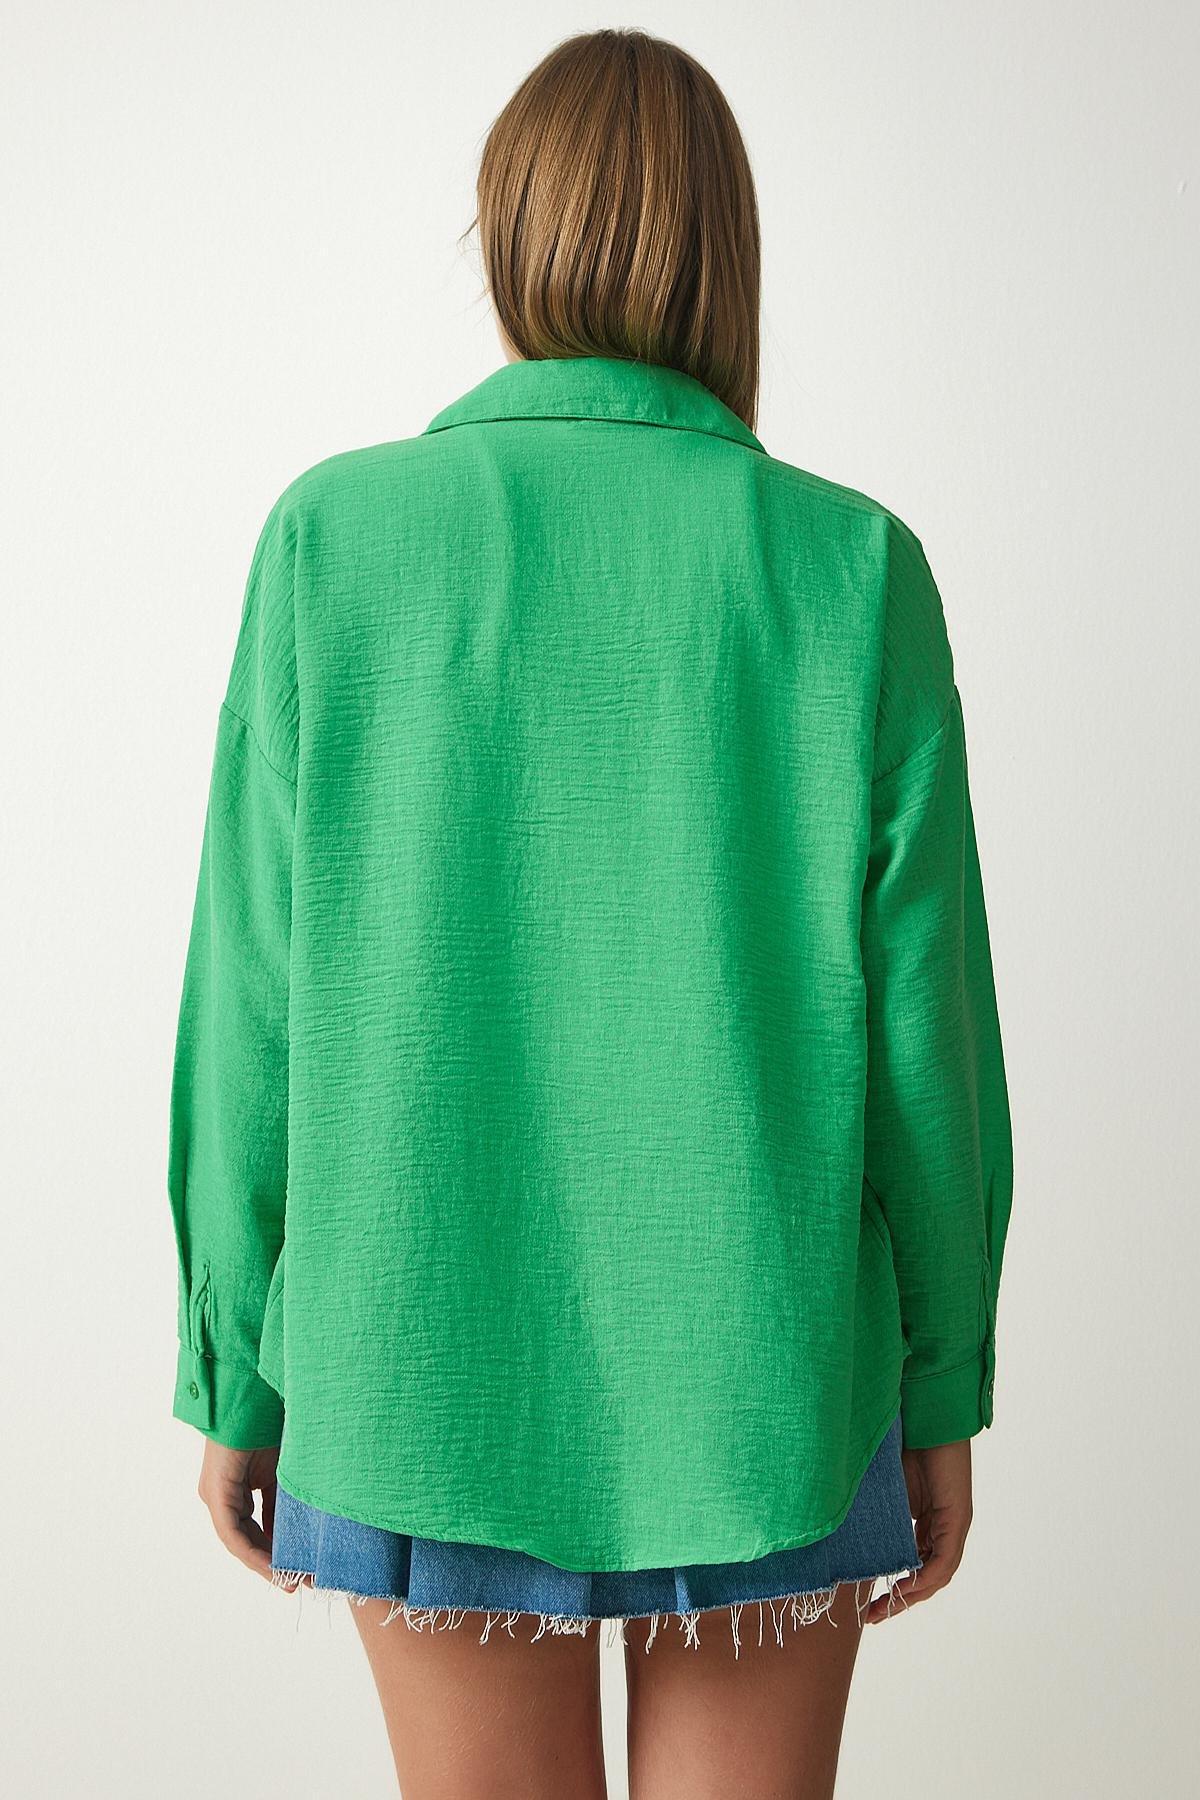 Happiness Istanbul - Green Oversize Linen Shirt